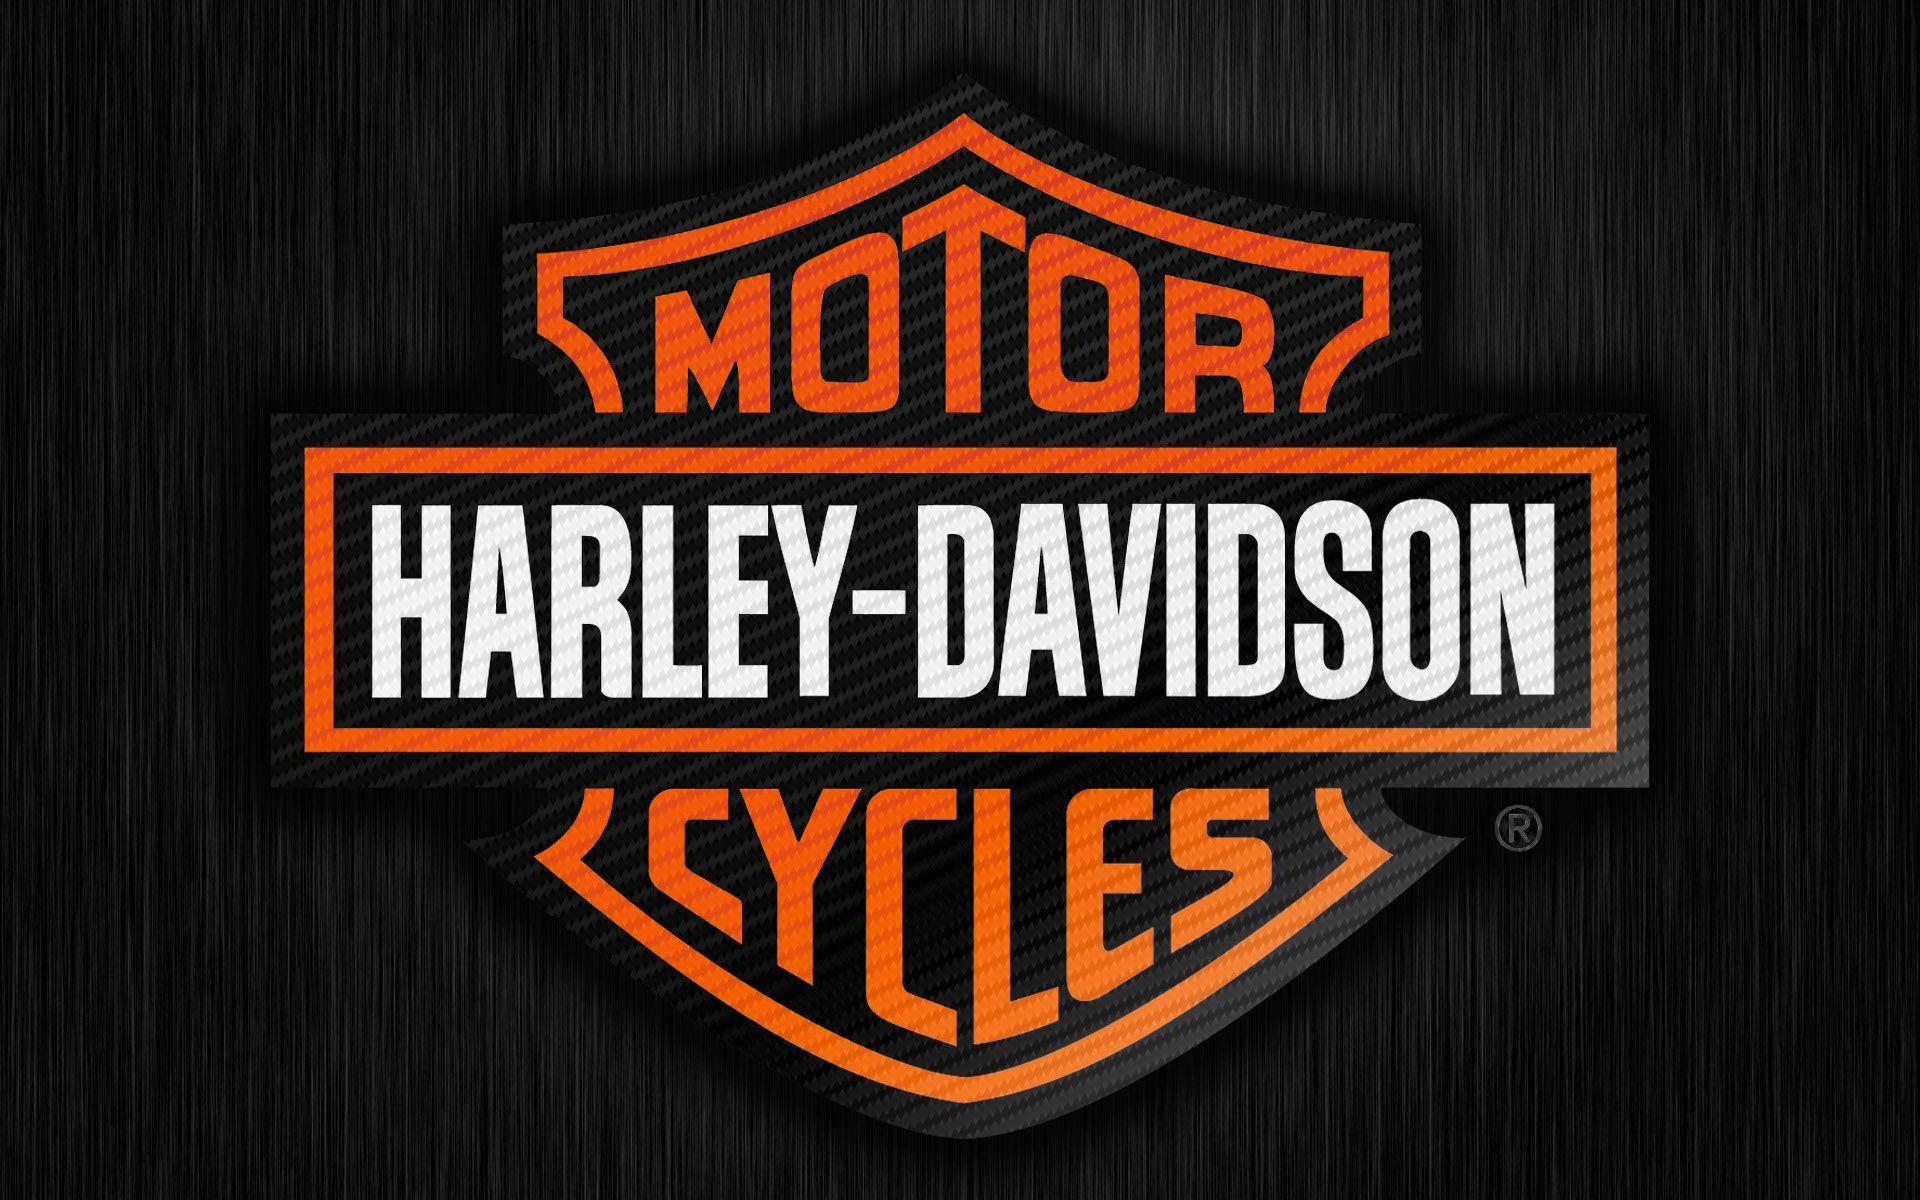 Harley Davidson Logo Wallpaper 16891 1920x1200 px